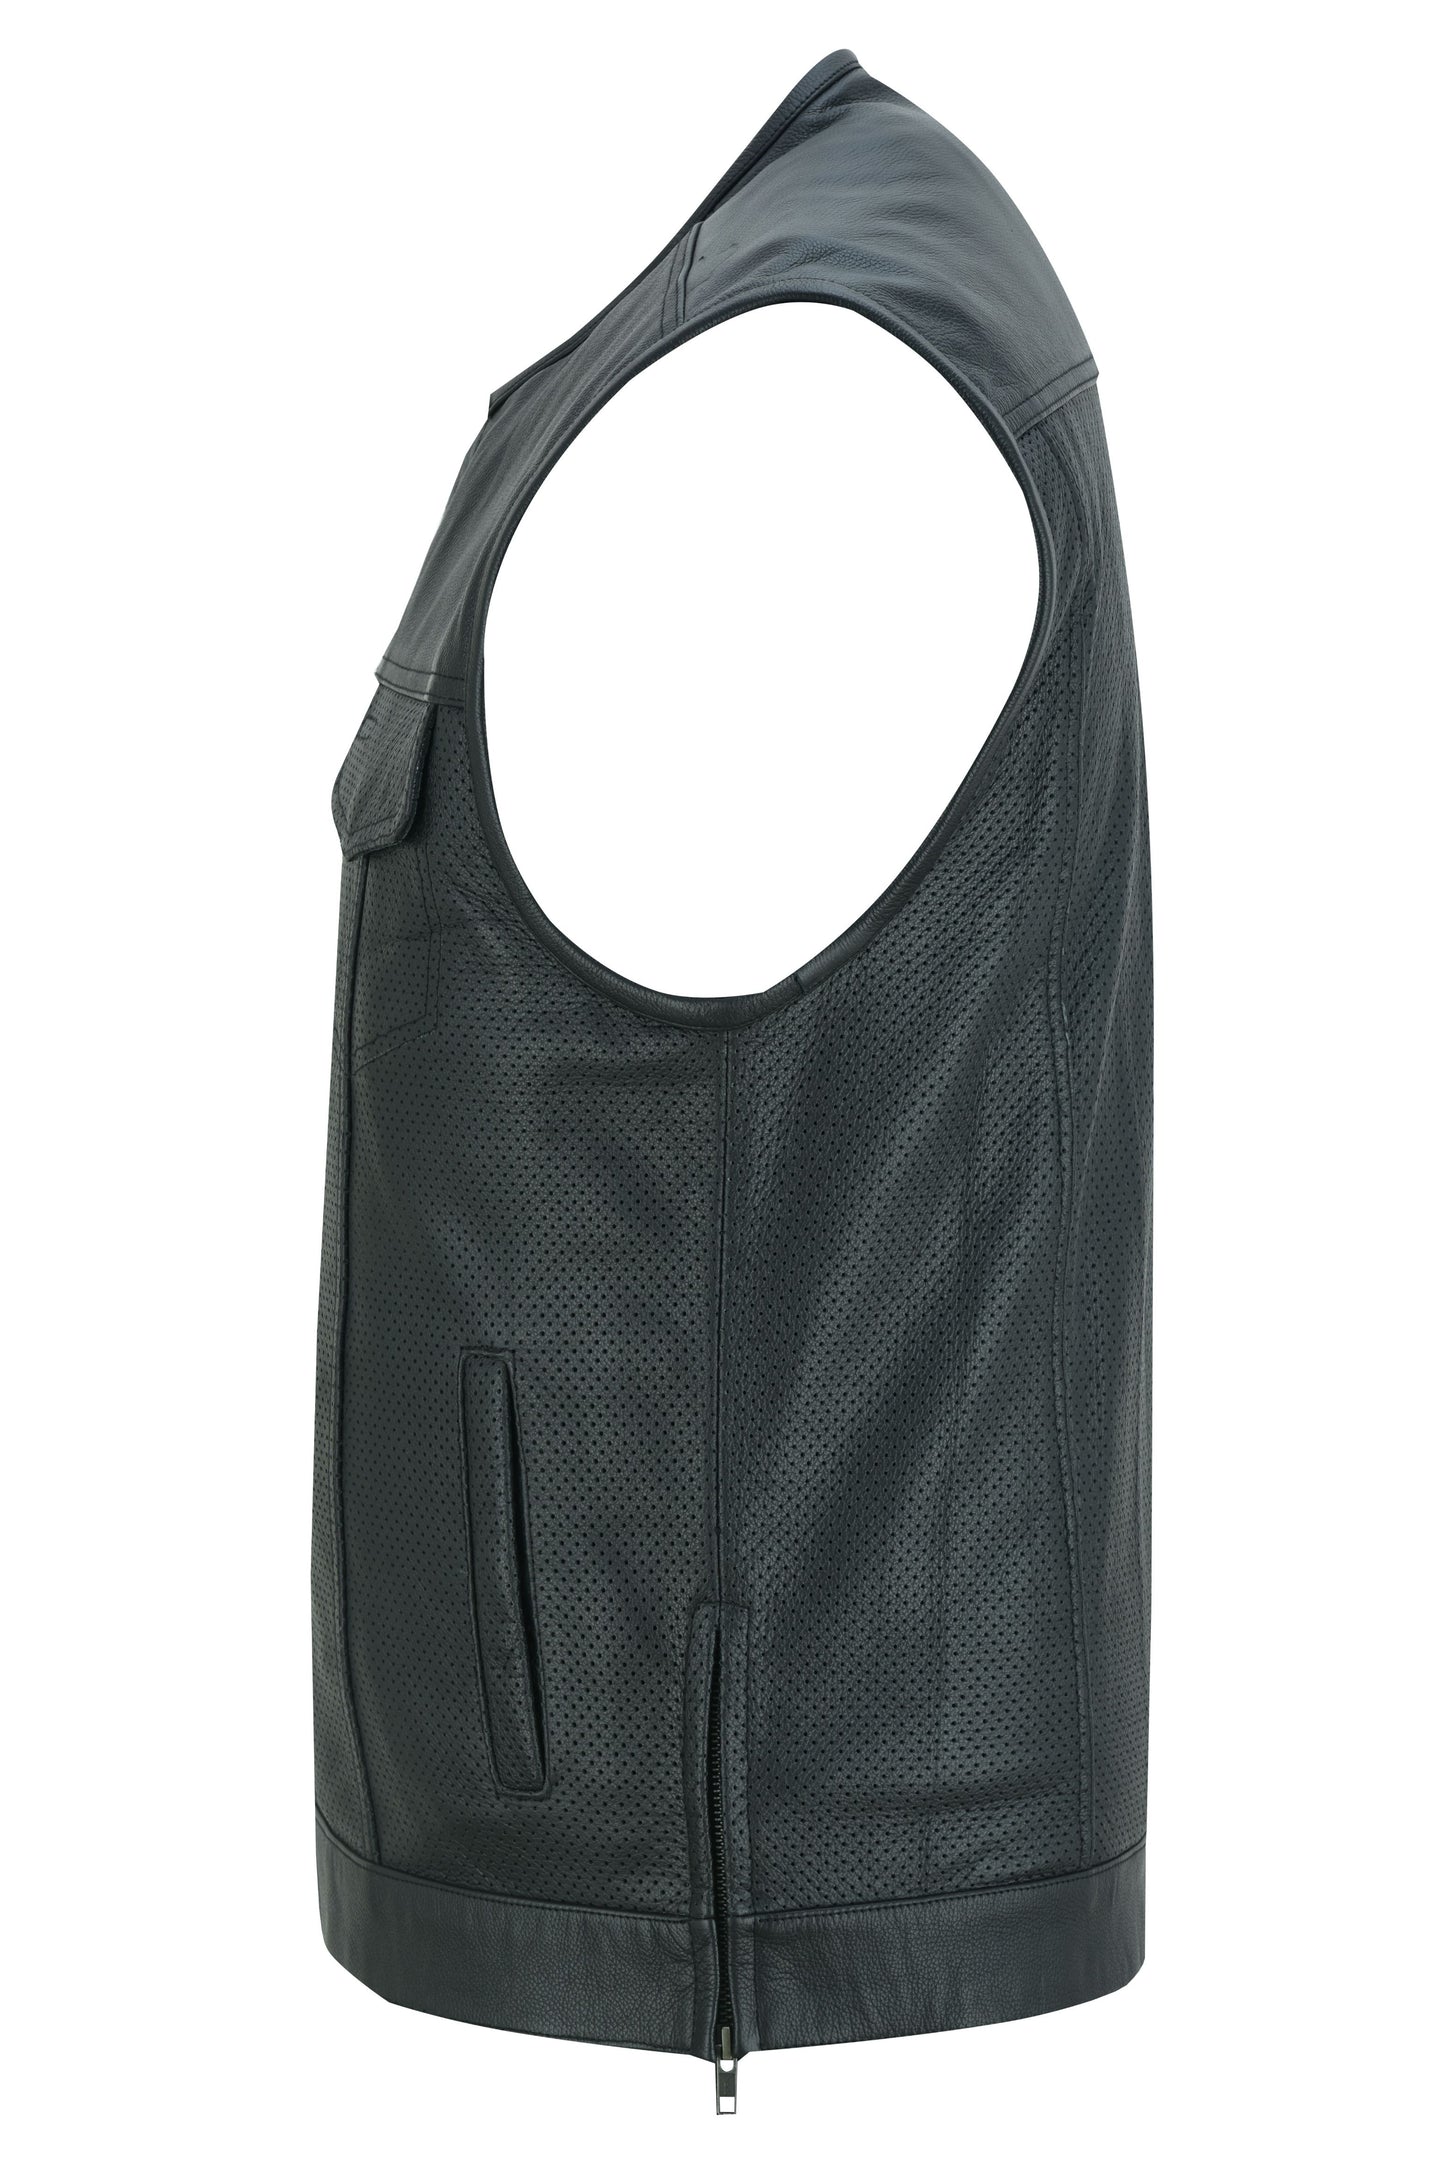 Men's Premium Perforated Single Back Panel Concealment Vest W/O